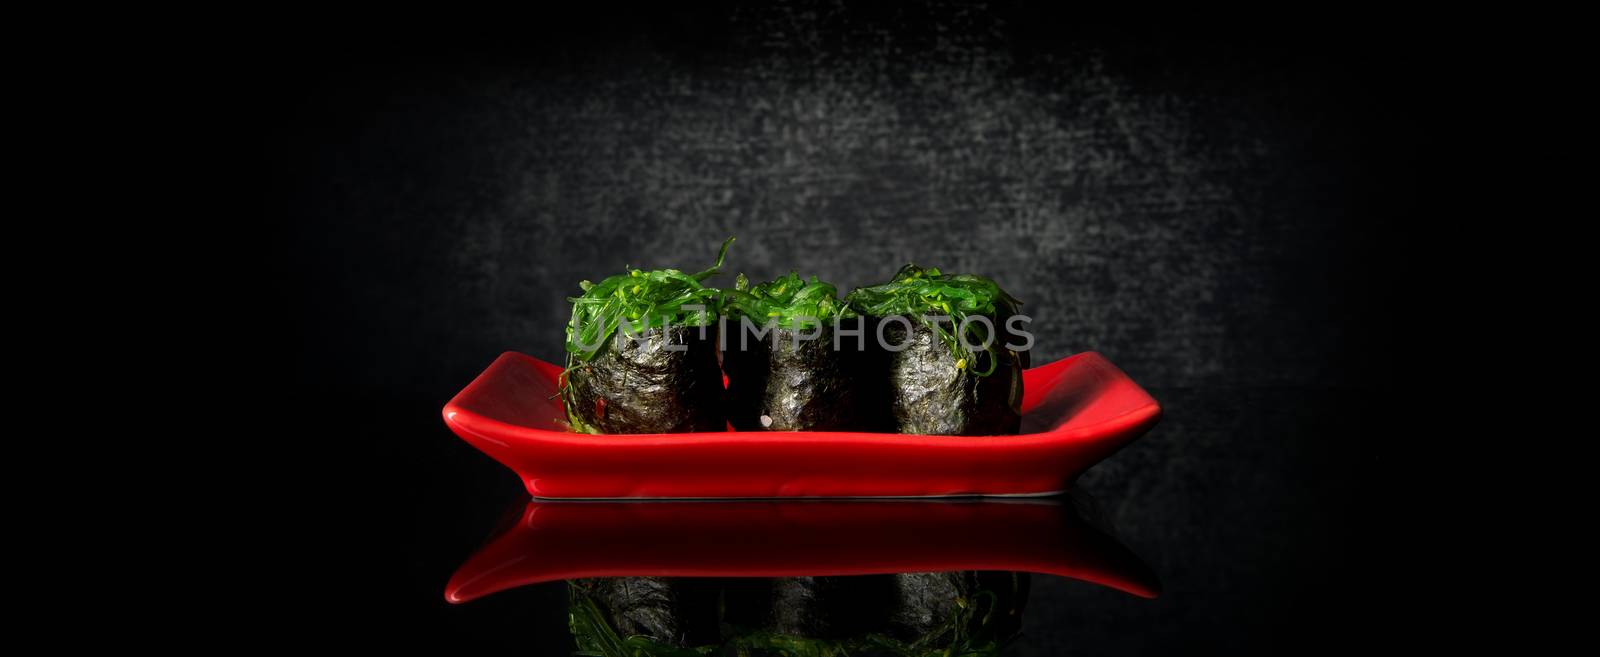 Rolls with chuka algae on red dish and black background